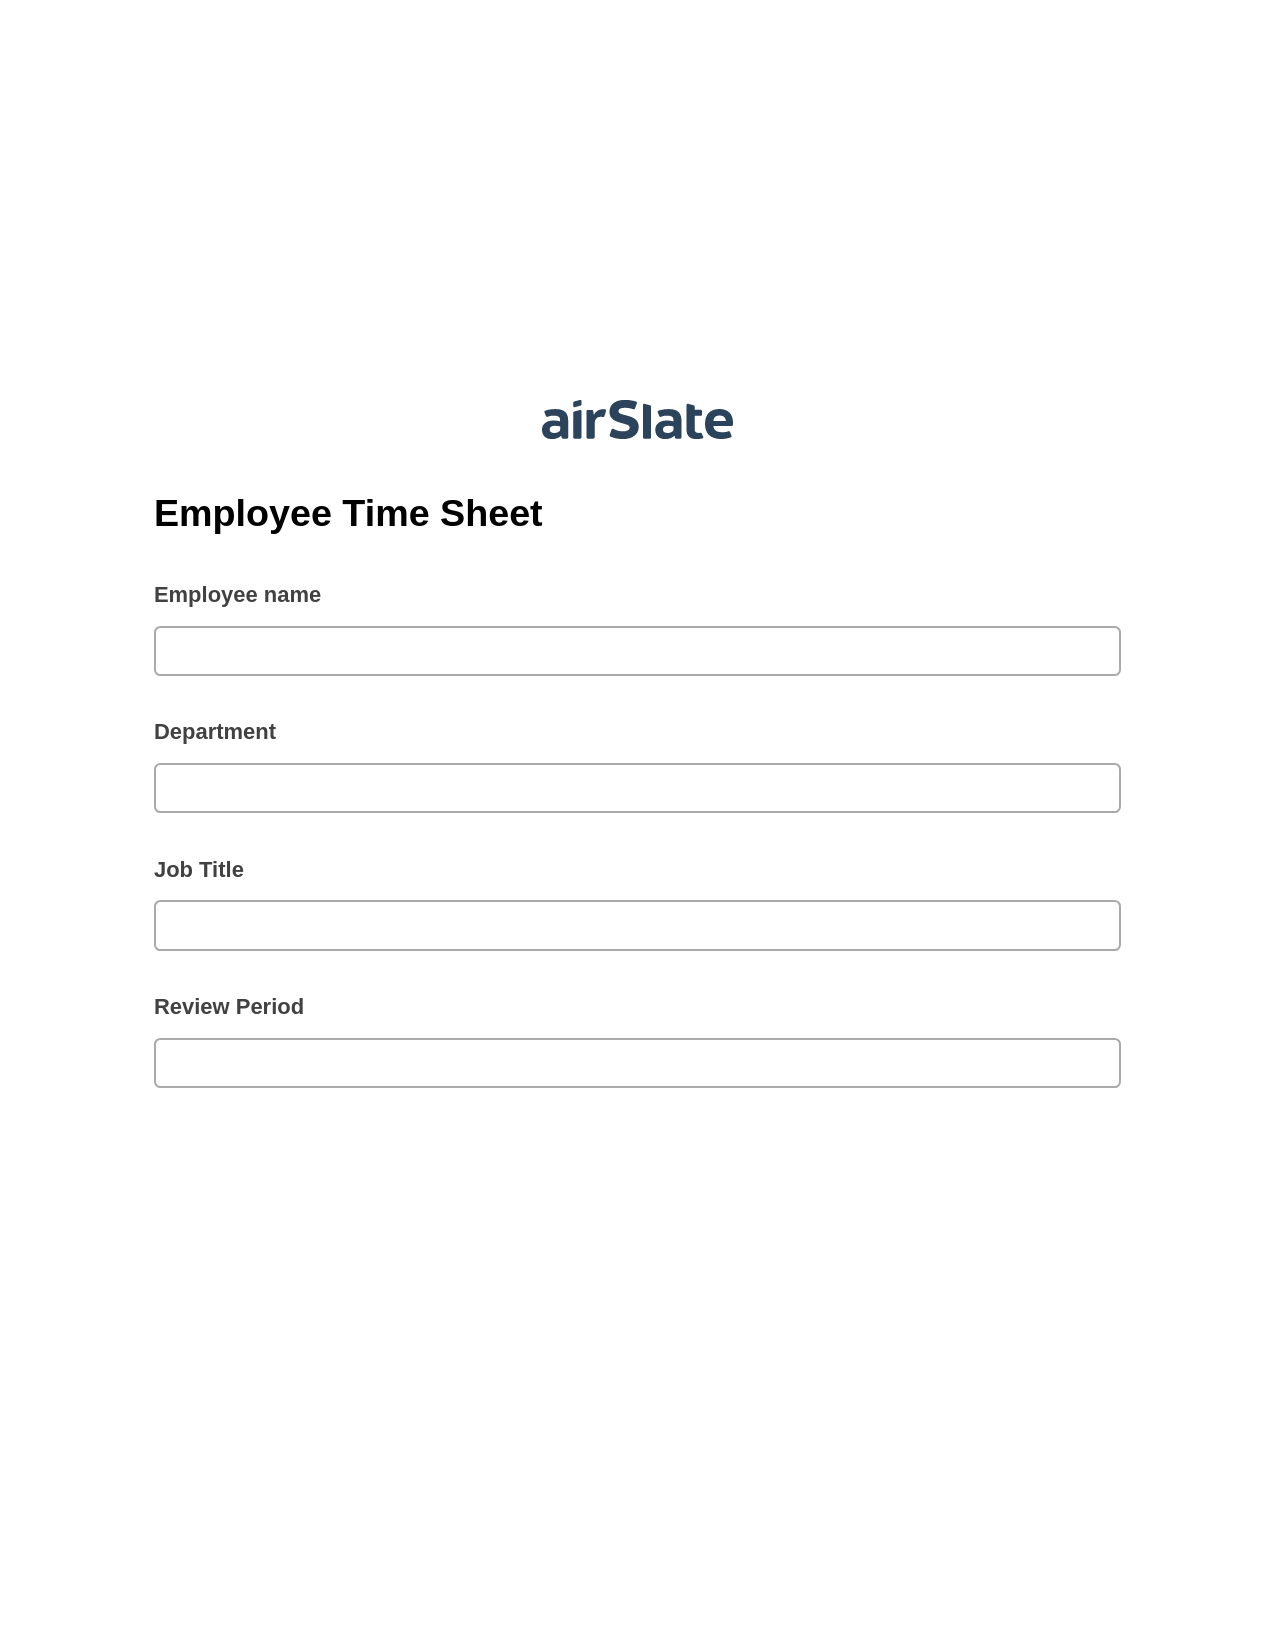 Multirole Employee Time Sheet Pre-fill Document Bot, Create slate addon, Archive to Dropbox Bot